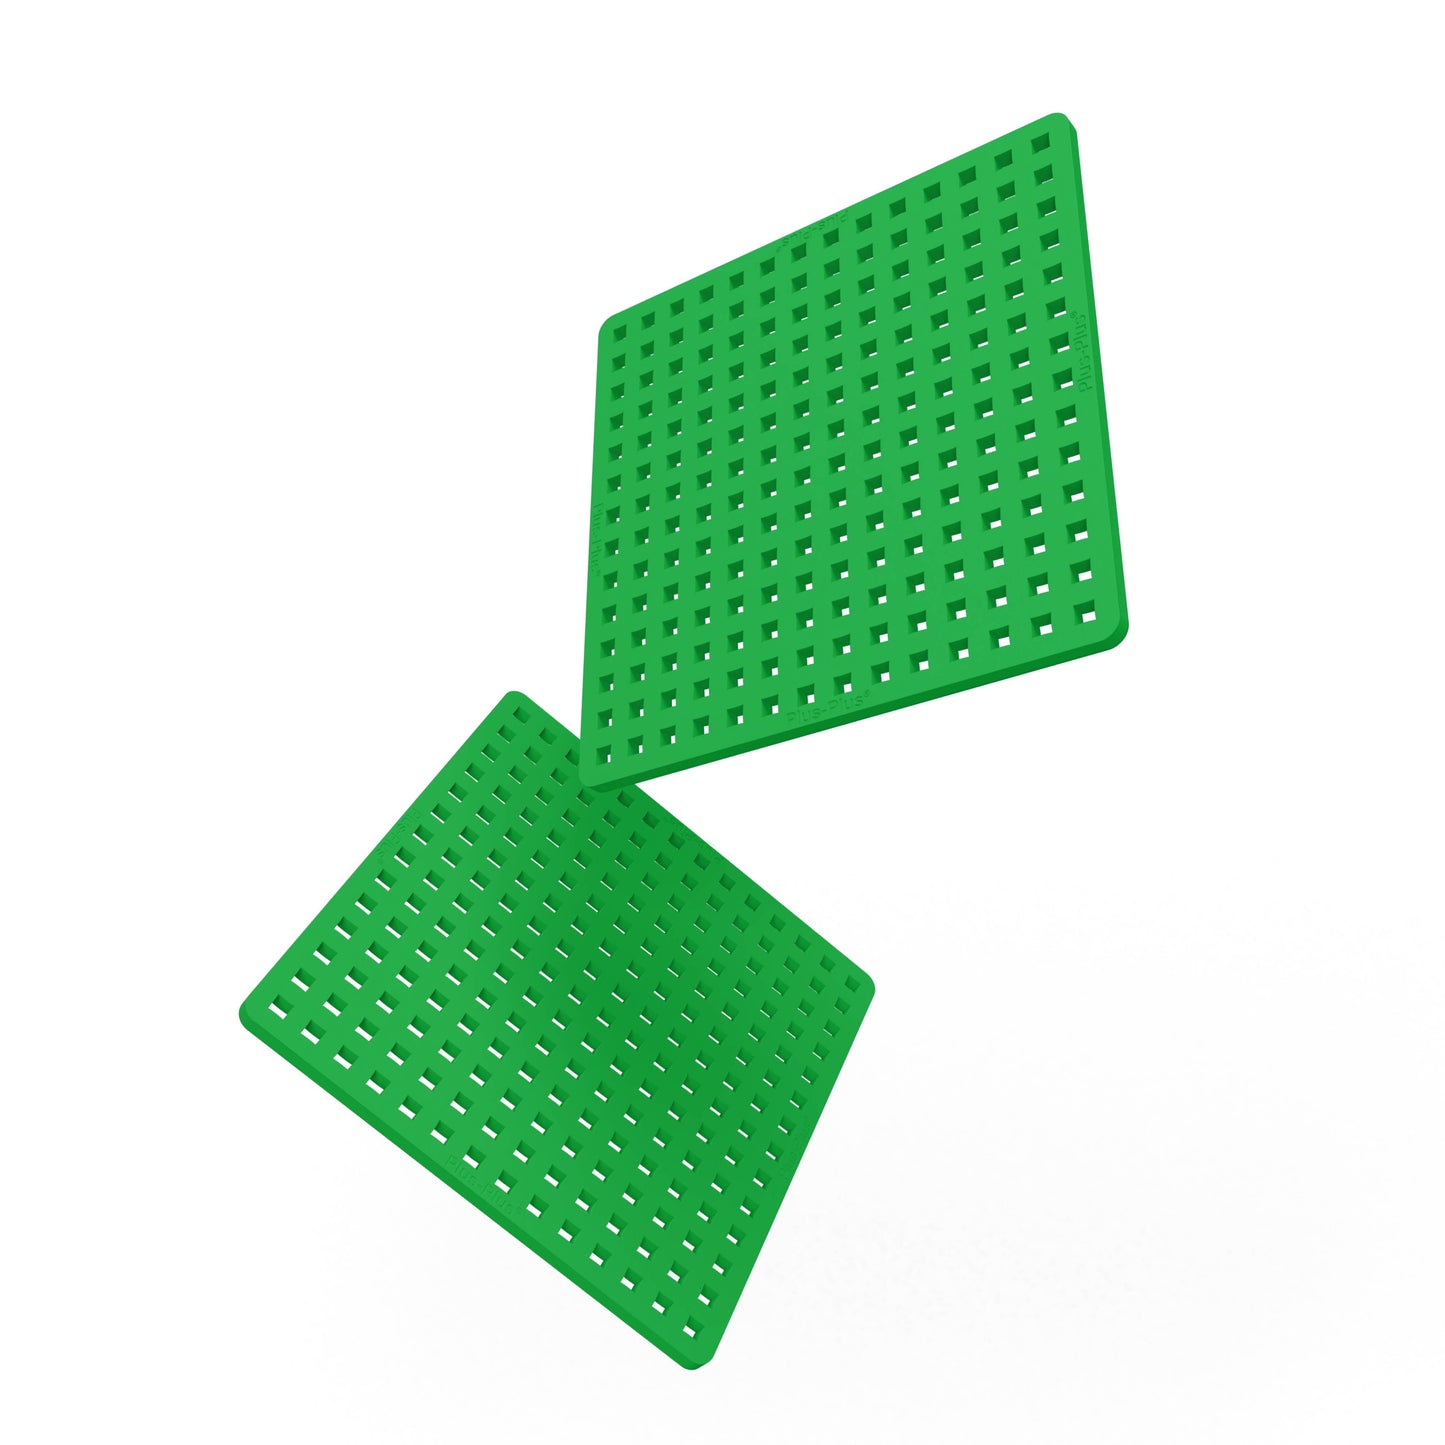 Plus-Plus USA - Baseplate Duo - Green